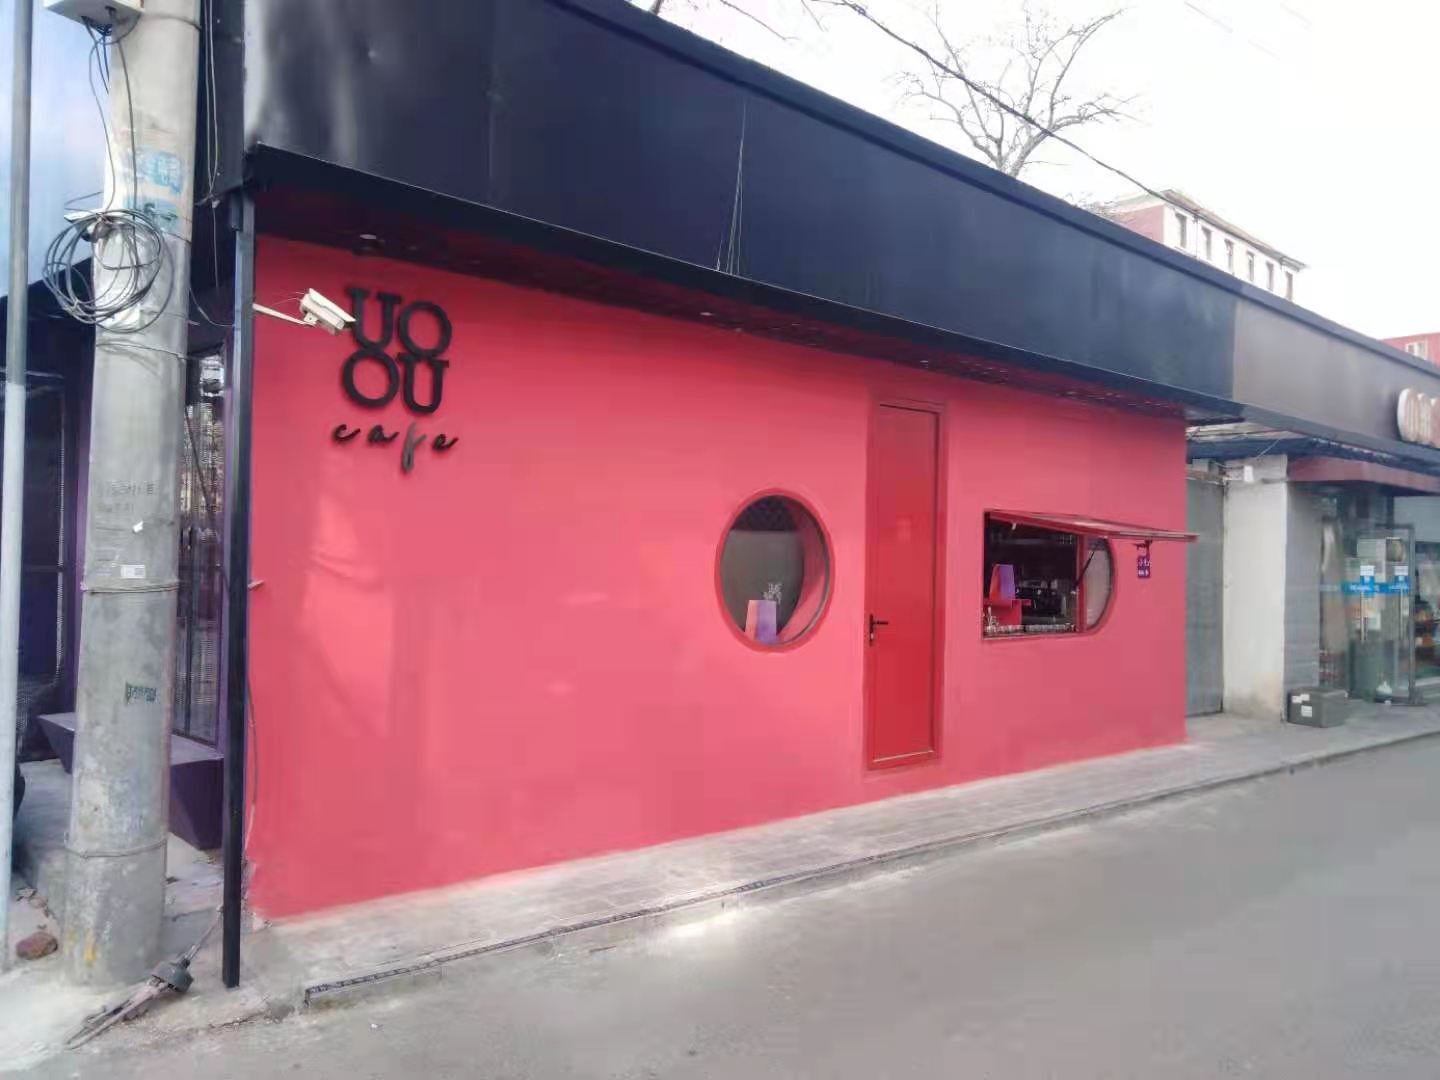 Capital Caff: Uoou Cafe Brings Bright Wanghong Flare to Gongti